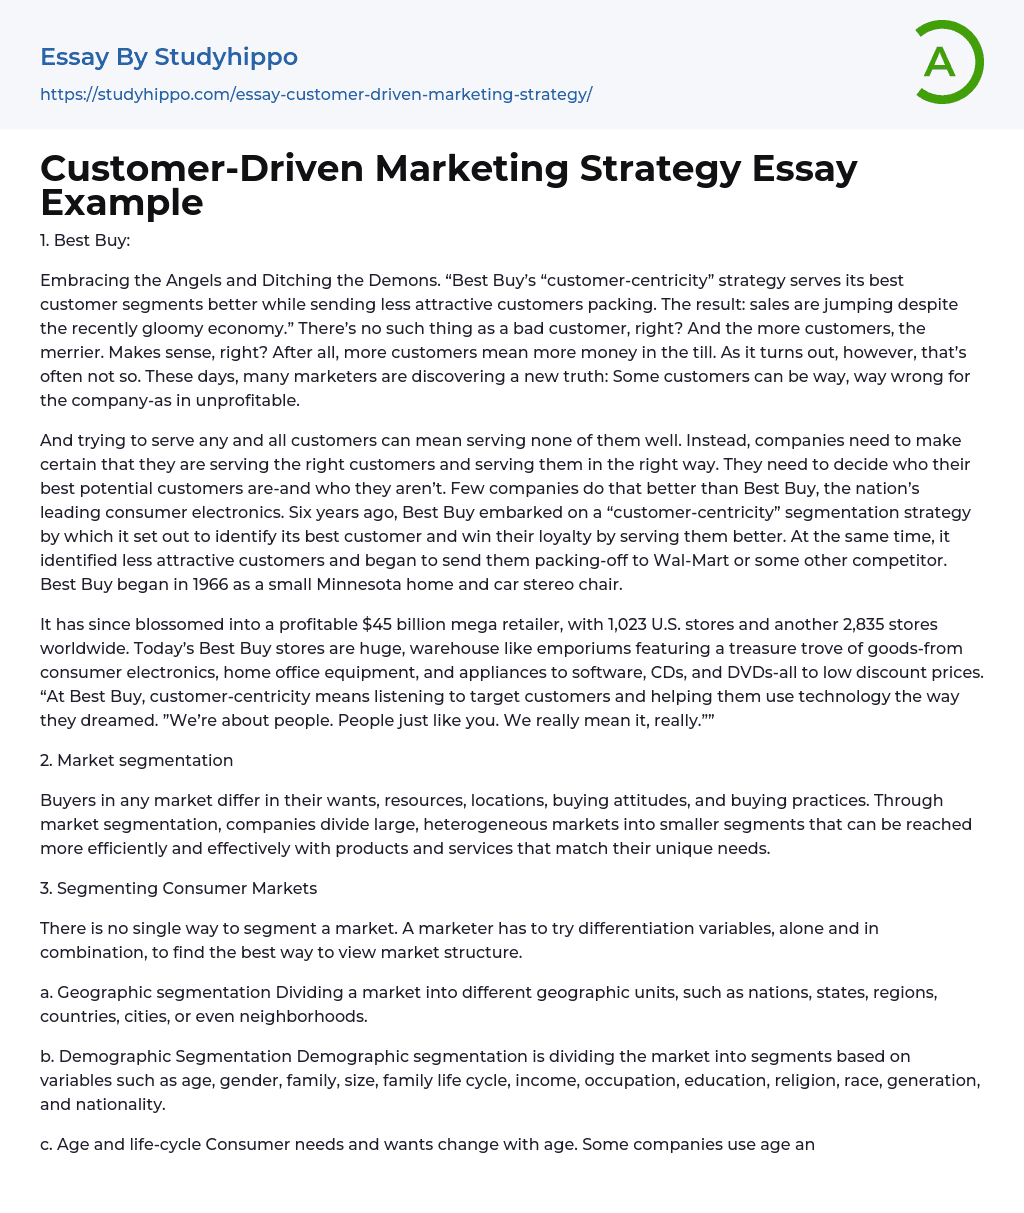 Customer-Driven Marketing Strategy Essay Example